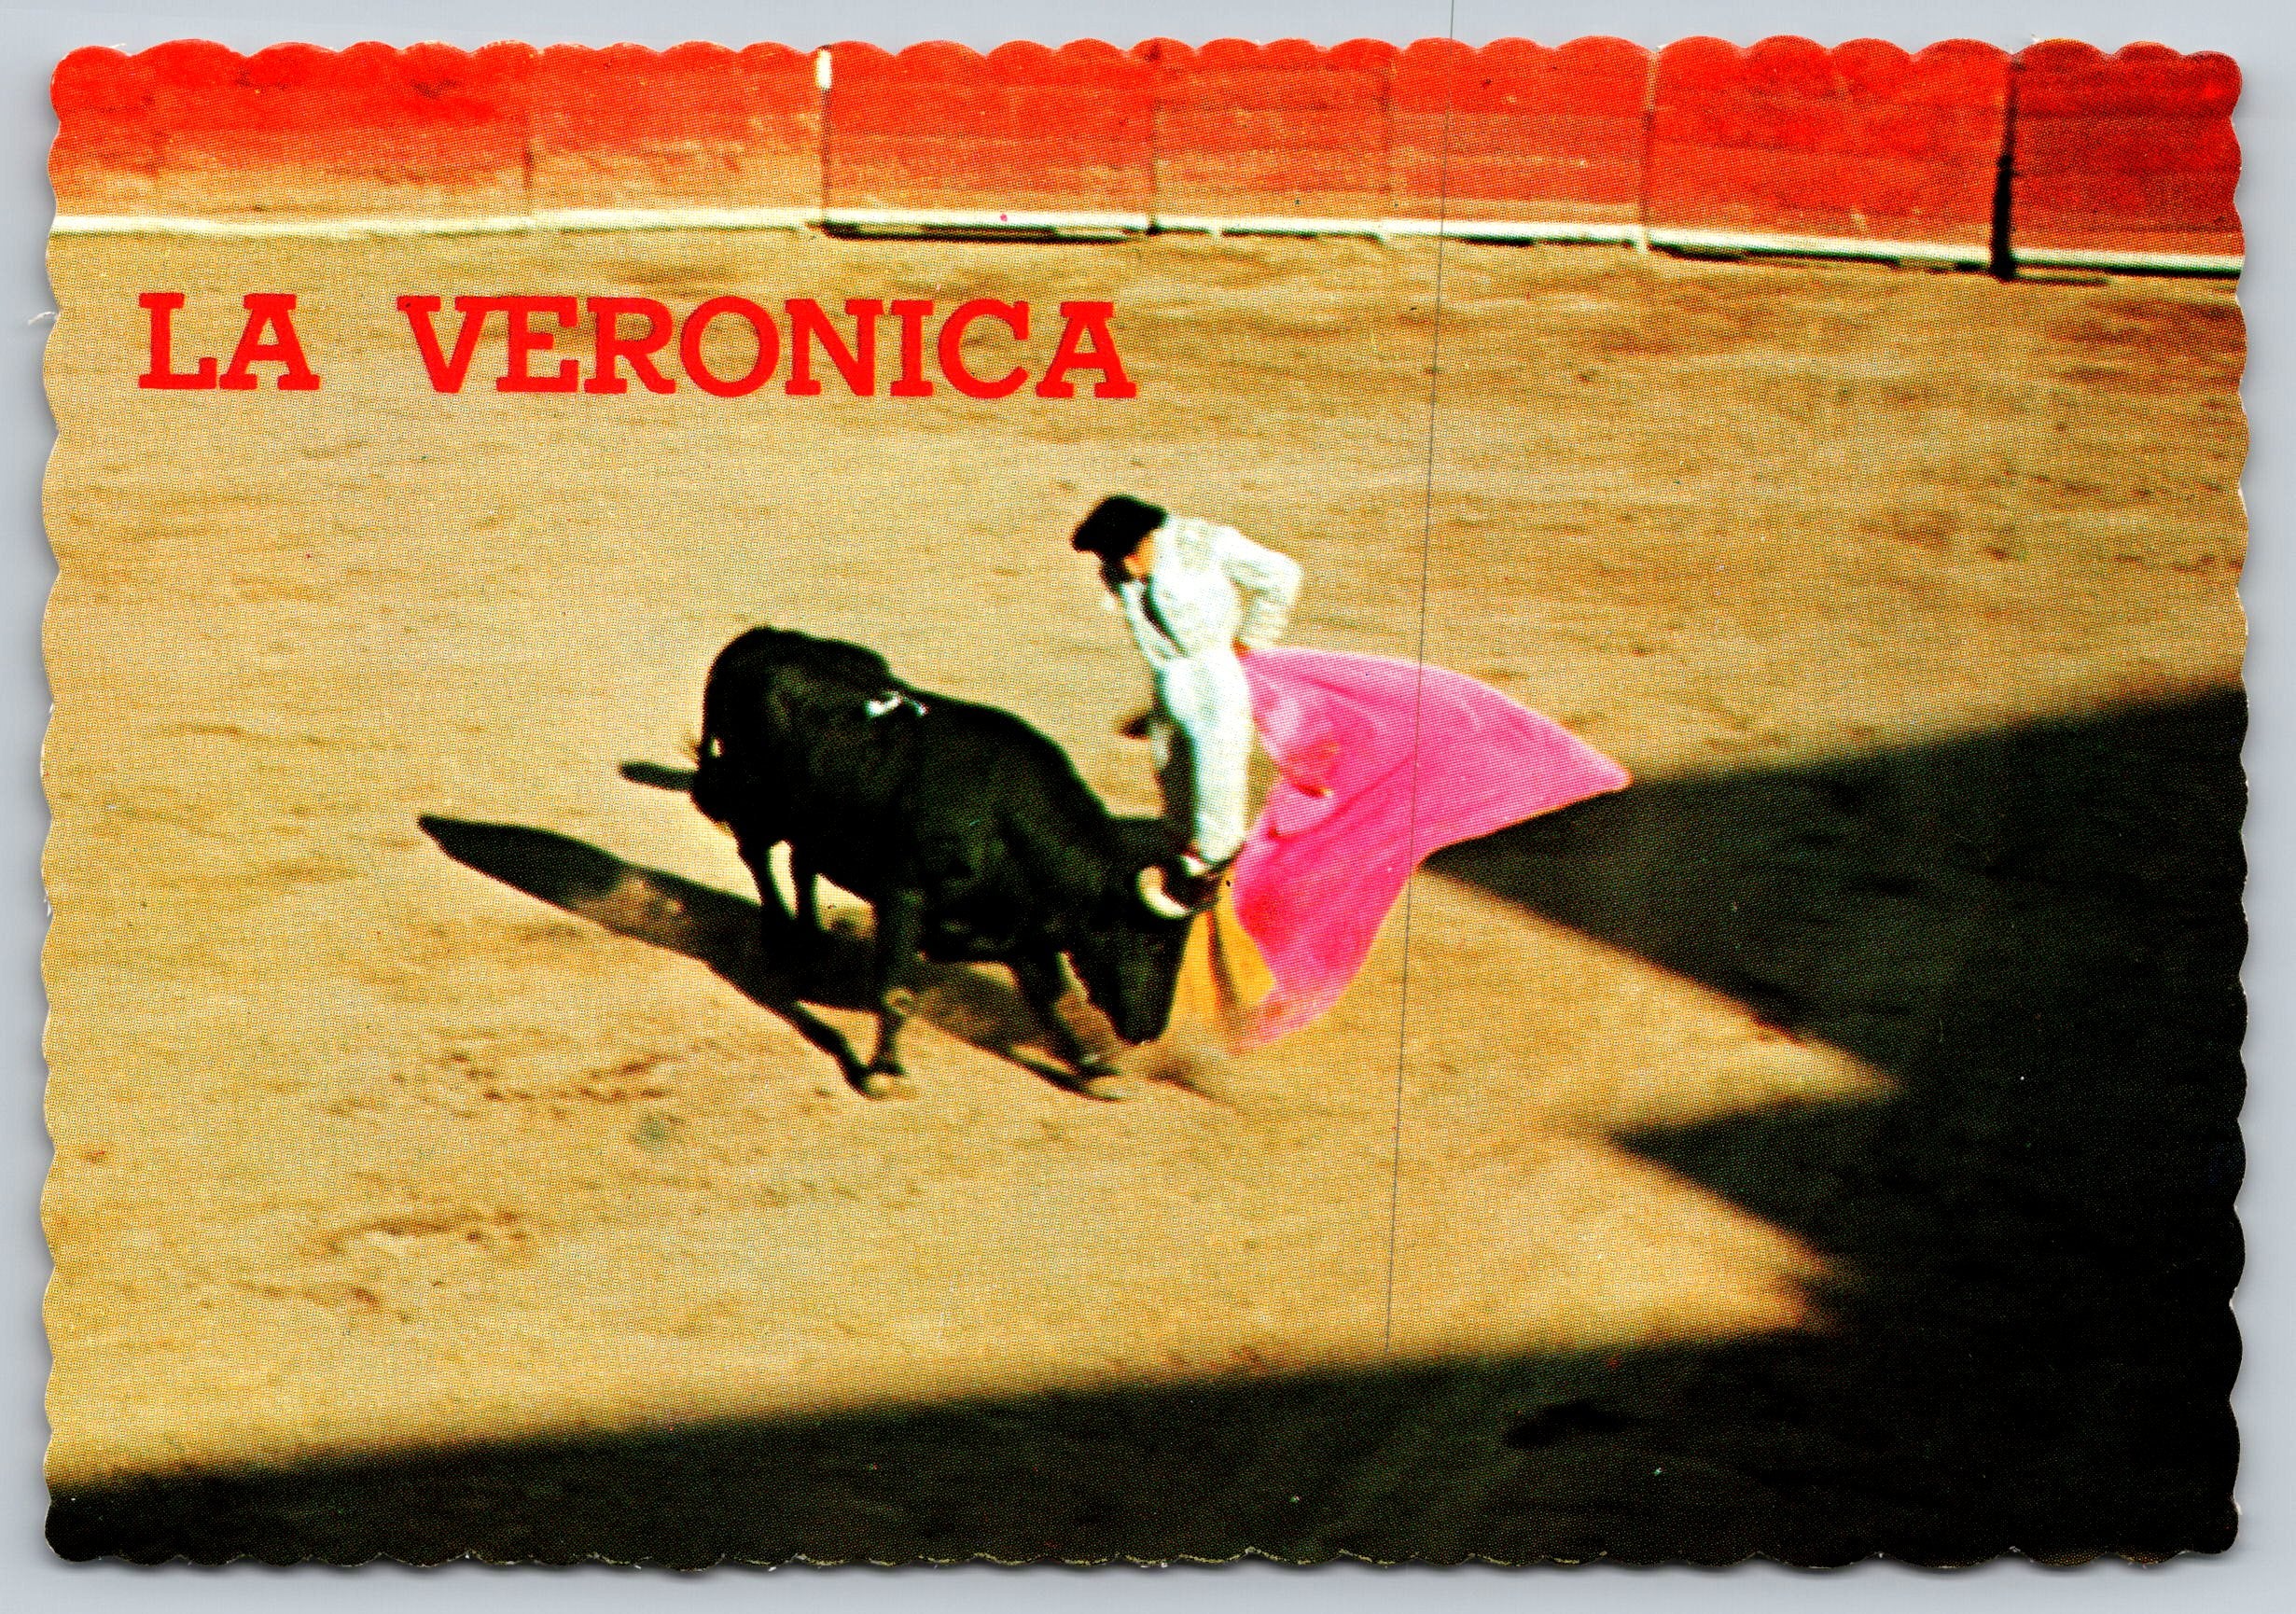 La Veronica, Bull Fight, Old Mexico, Vintage Post Card